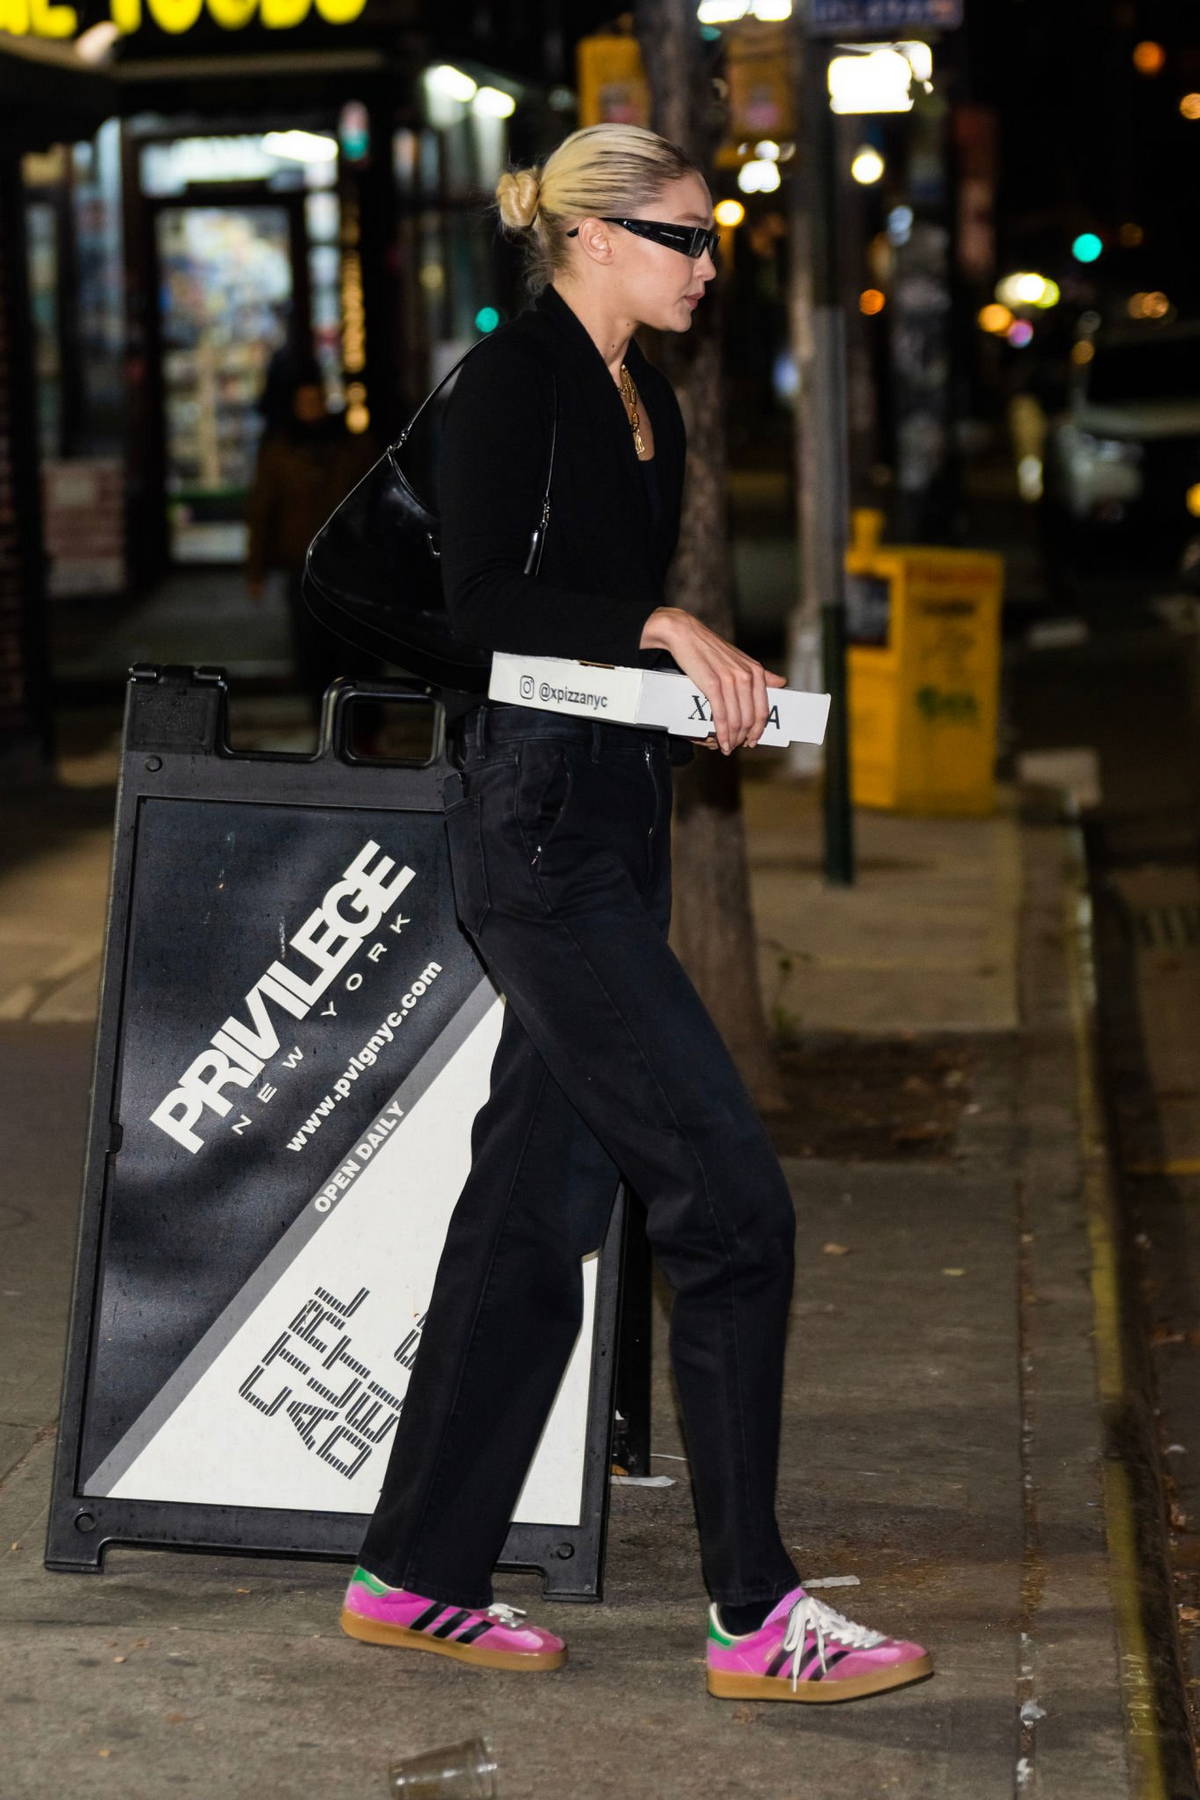 Hailey Bieber displays her toned figure in crop top and leggings